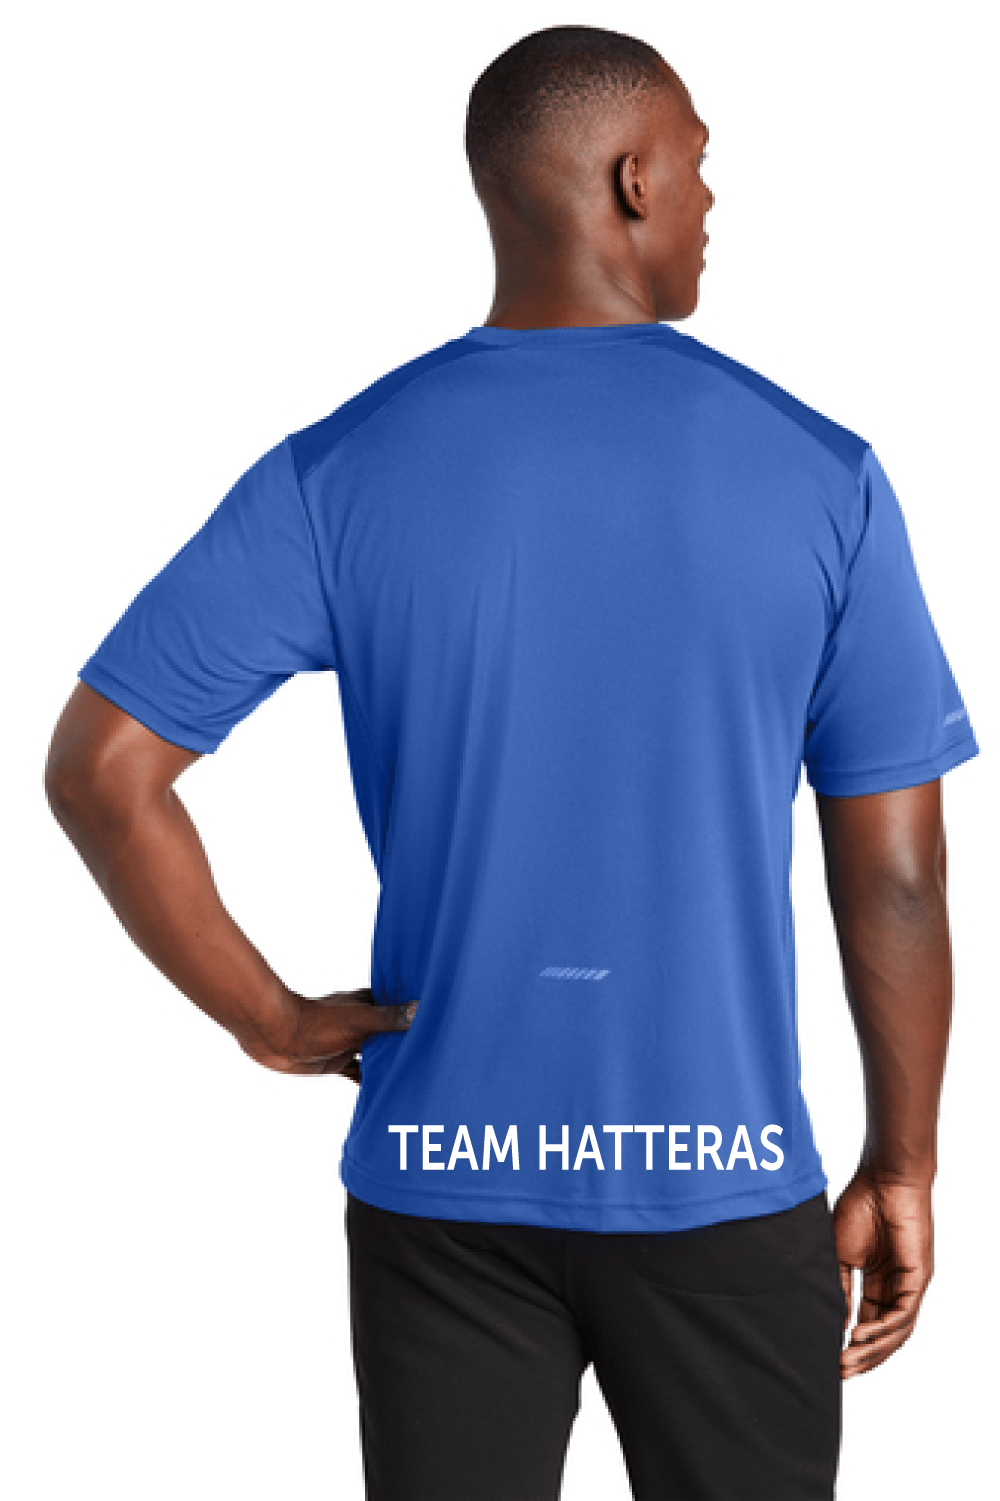 Hatteras Men's Crew Neck Tee Signature Lacrosse